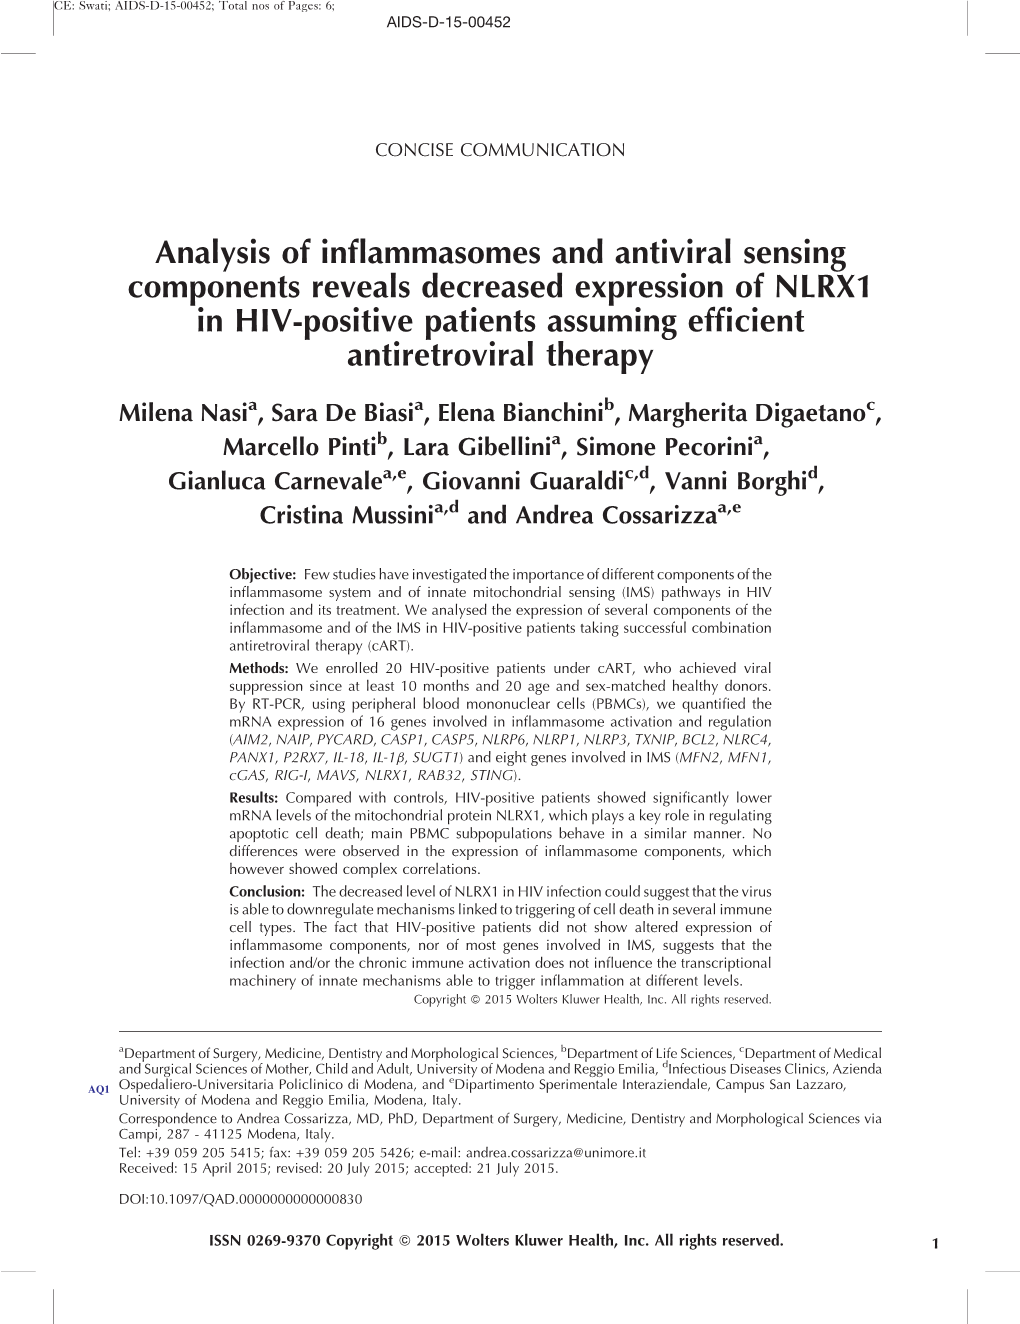 Analysis of Inflammasomes and Antiviral Sensing Components